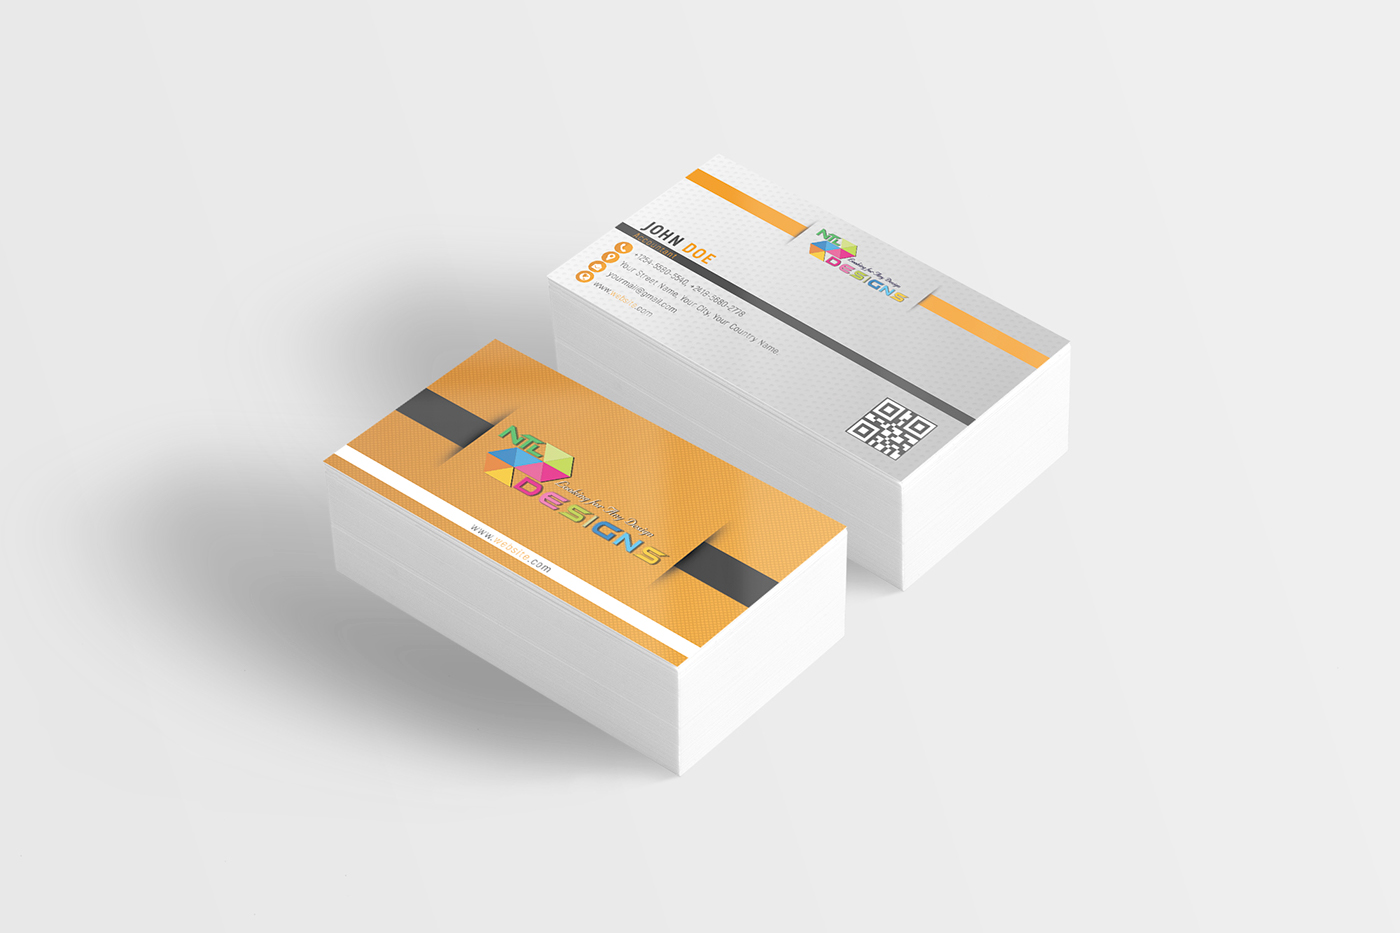 #businesscard #business   #card #VigitingCard #GraphicsDesign #Design #latest #best #smartcard #modern  